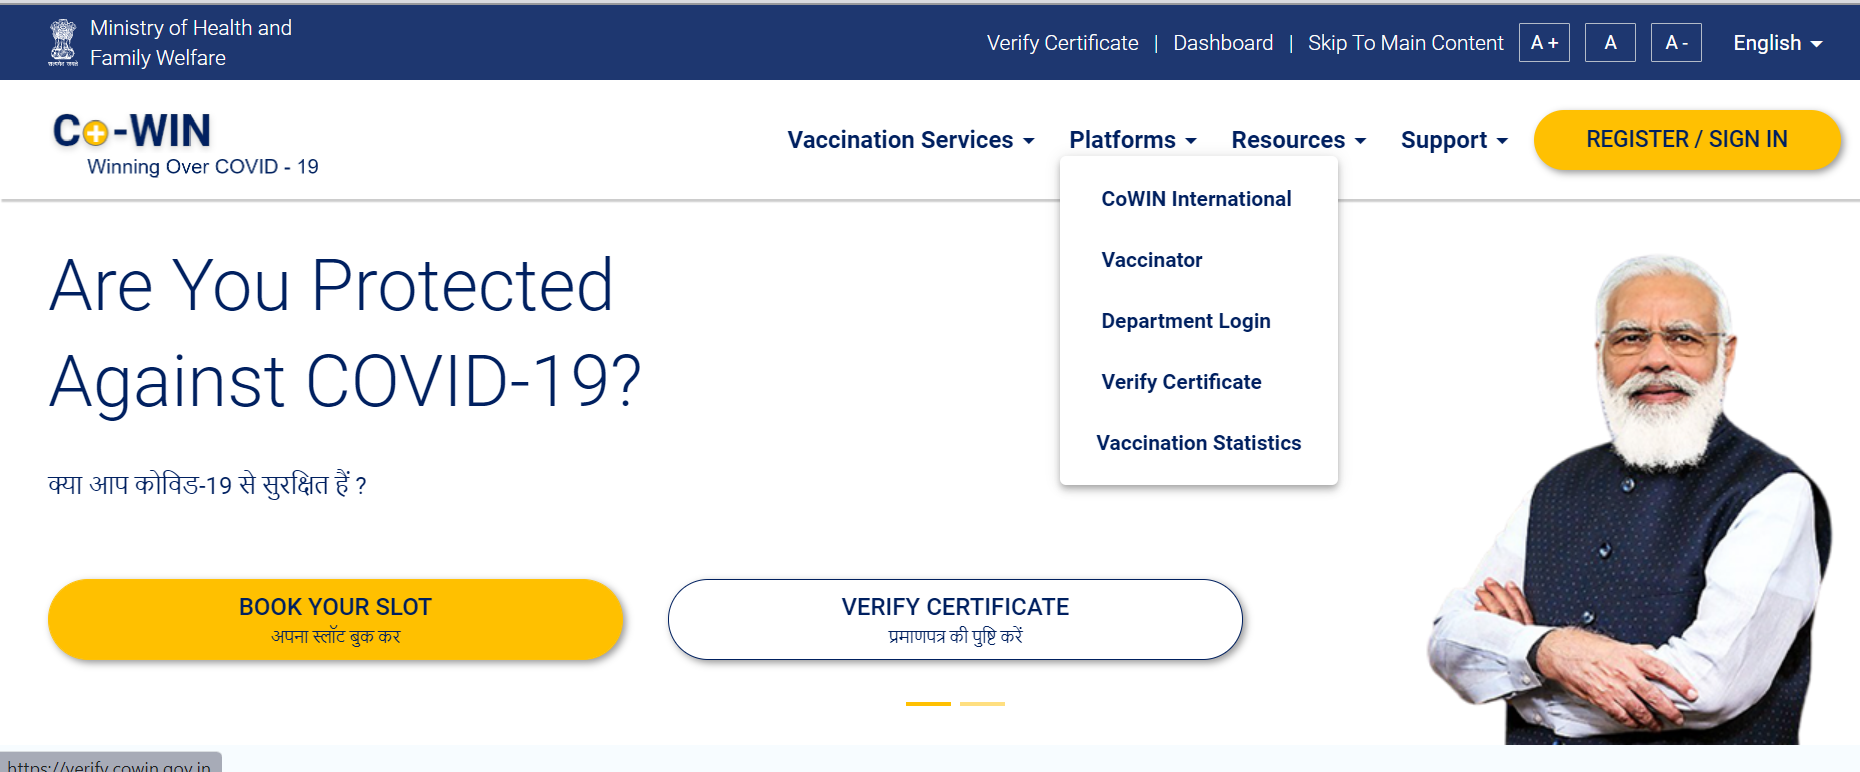 verify cowin certificate